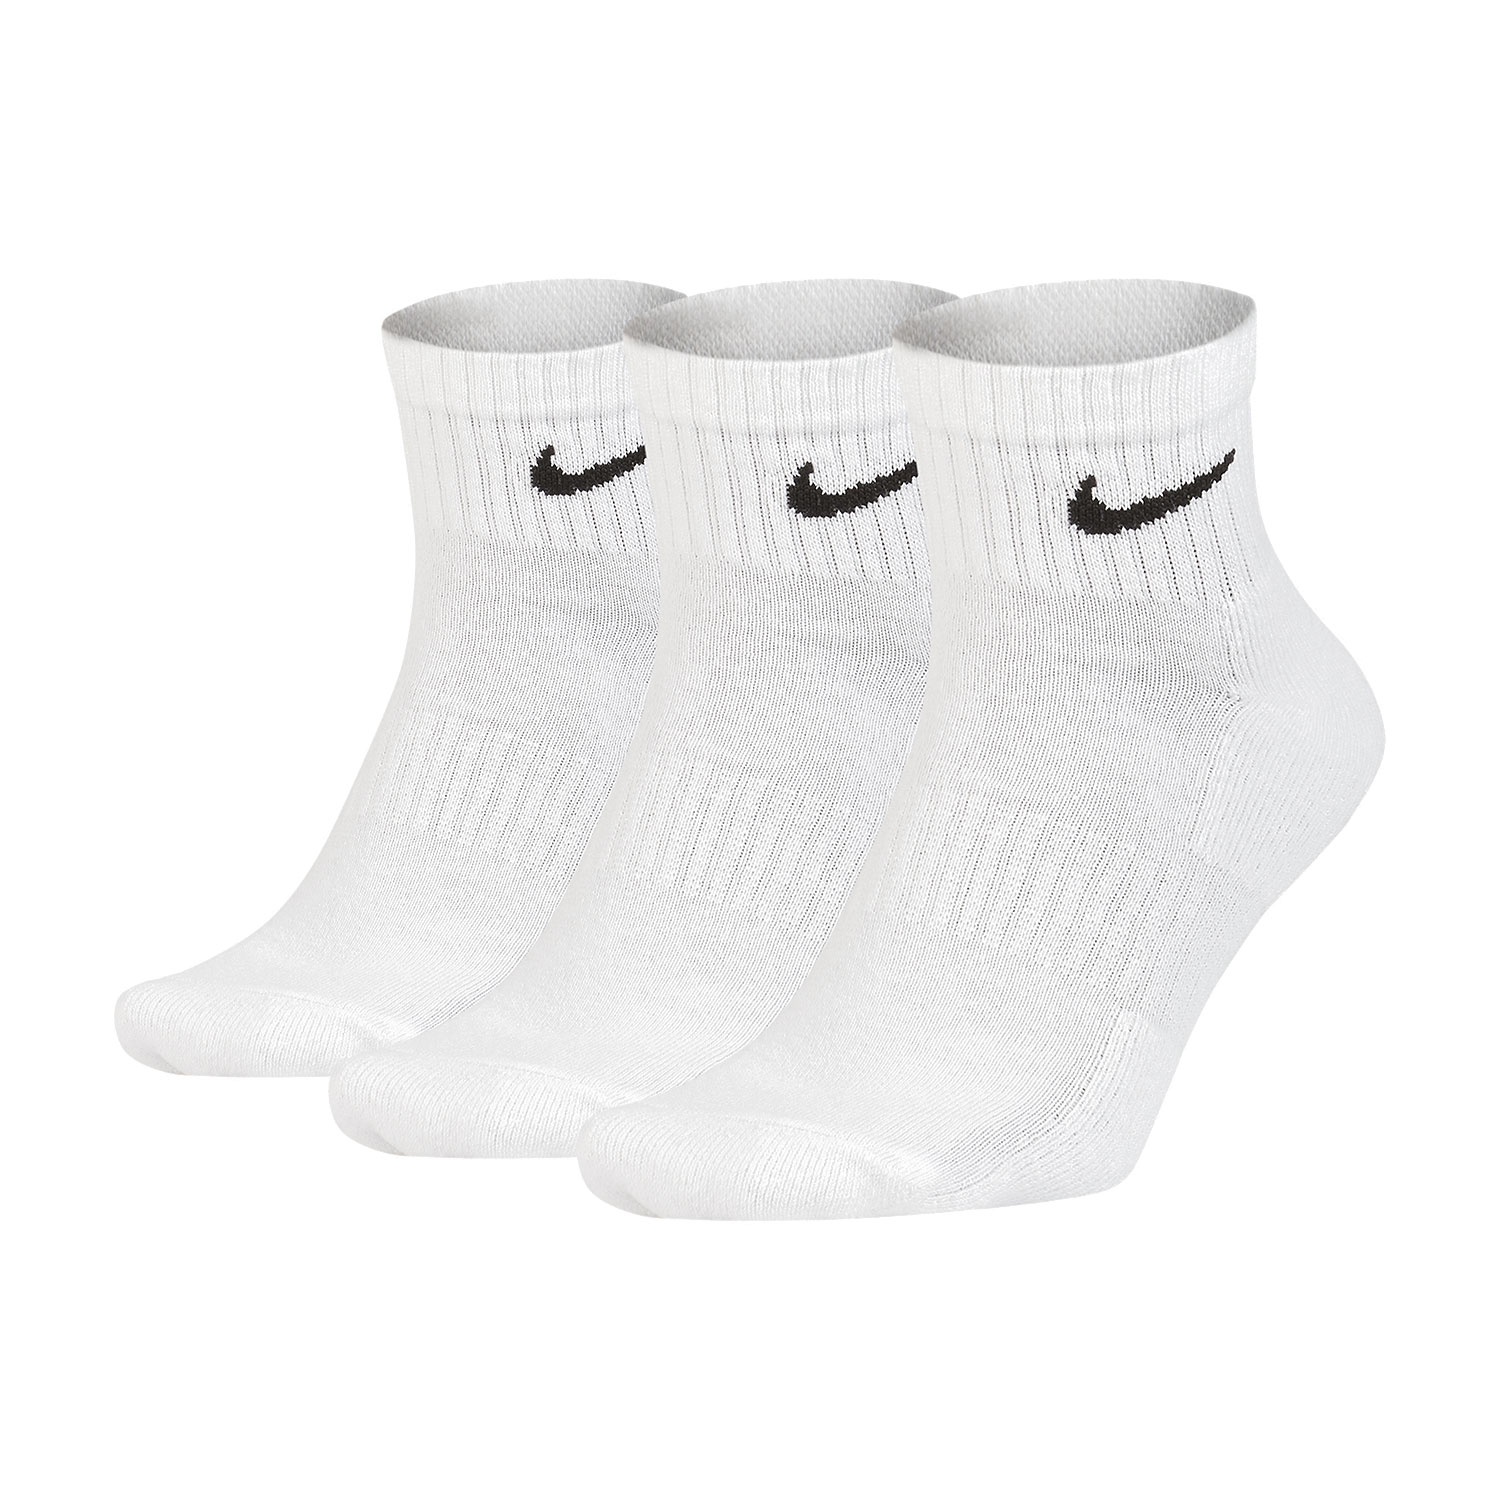 Nike Everyday Cushion x 3 Calcetines - White/Black